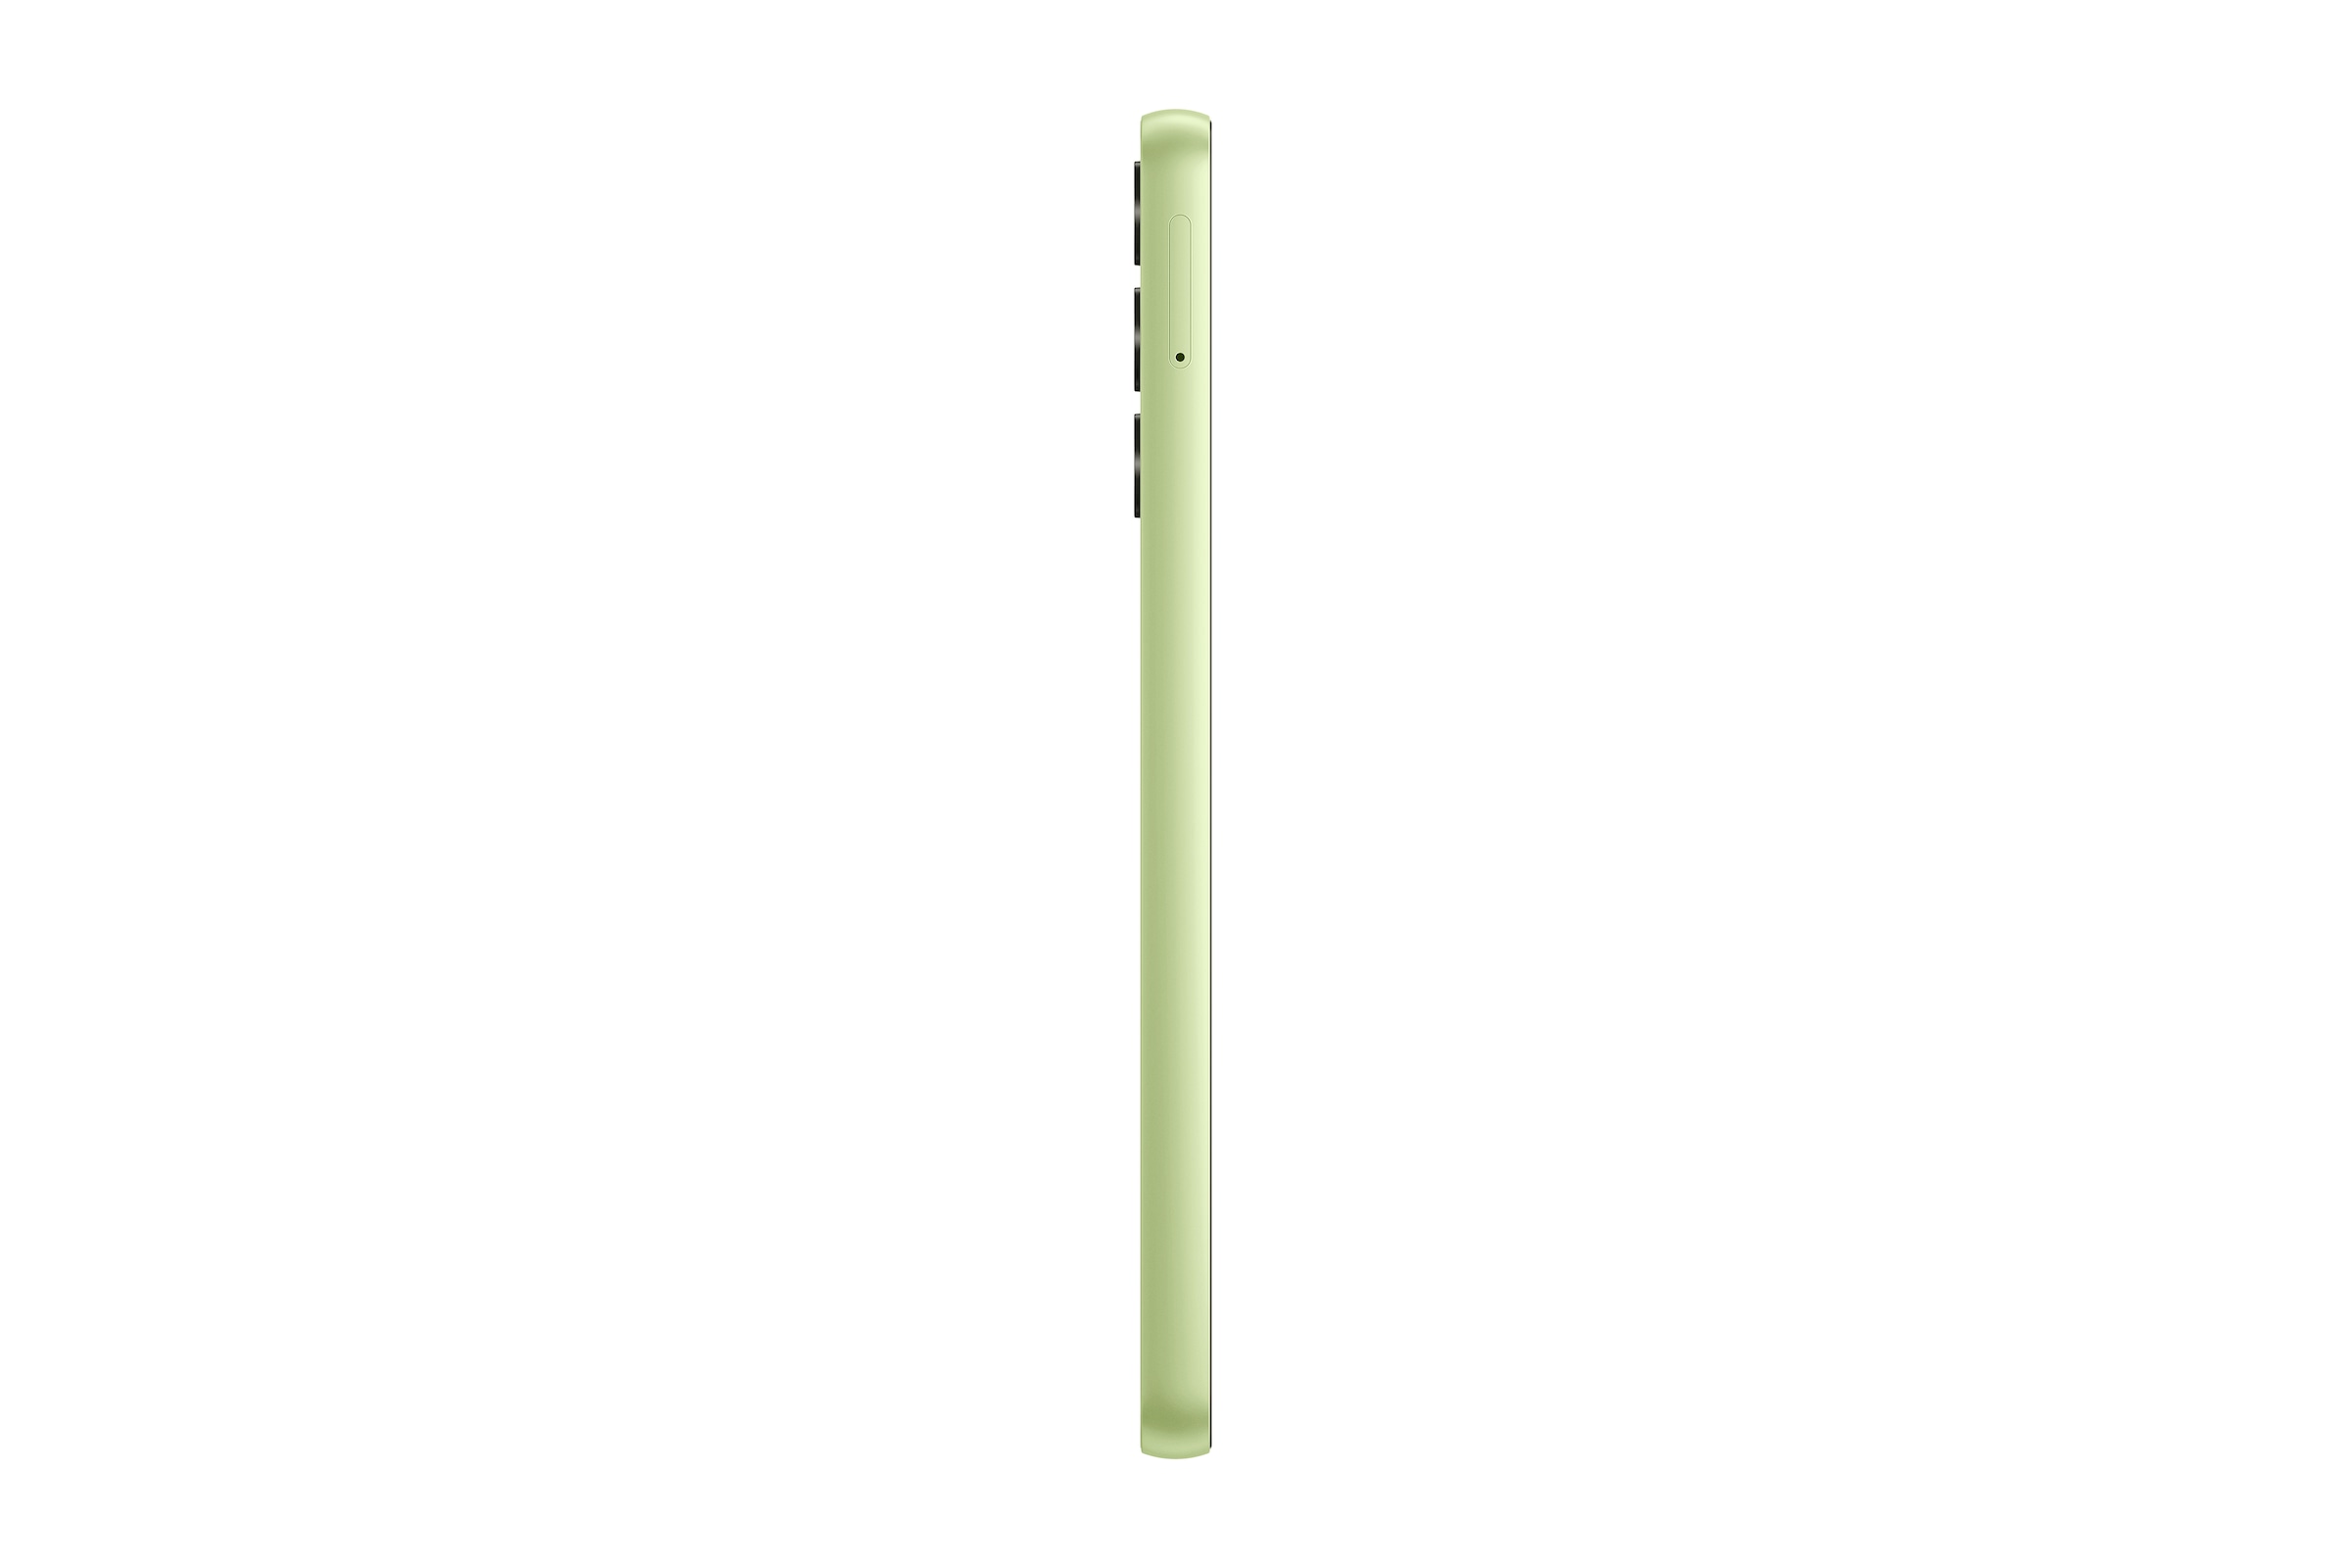 SAMSUNG Galaxy A05s, 64 GB, Light Green